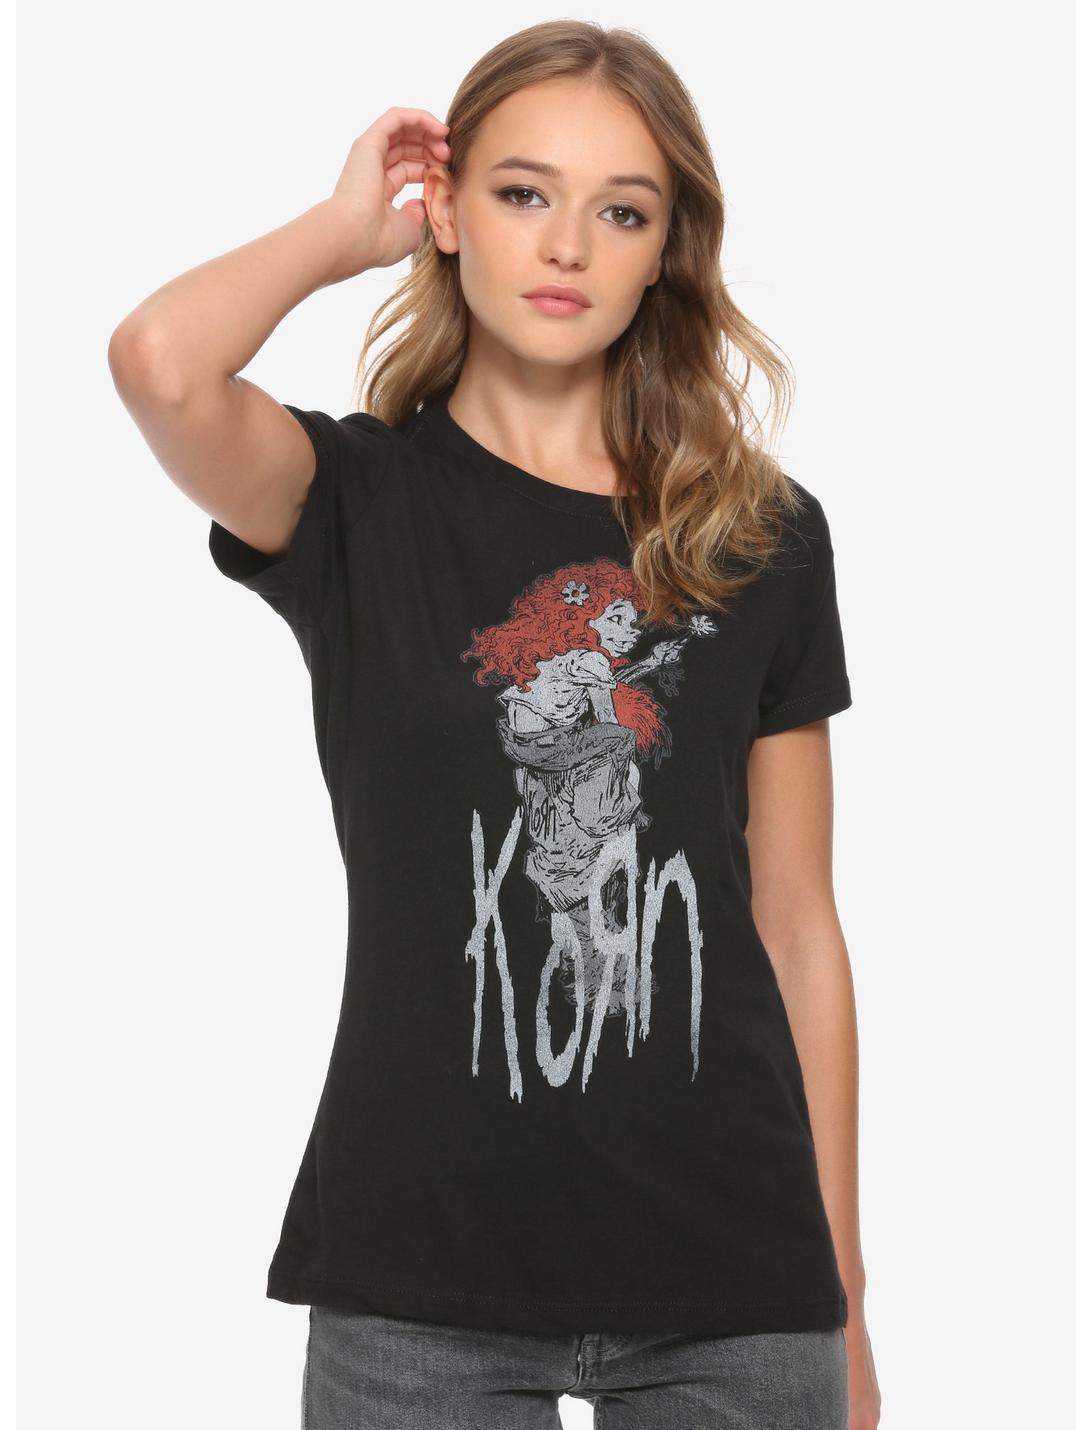 Korn Flower Child Girls T-Shirt, BLACK, hi-res